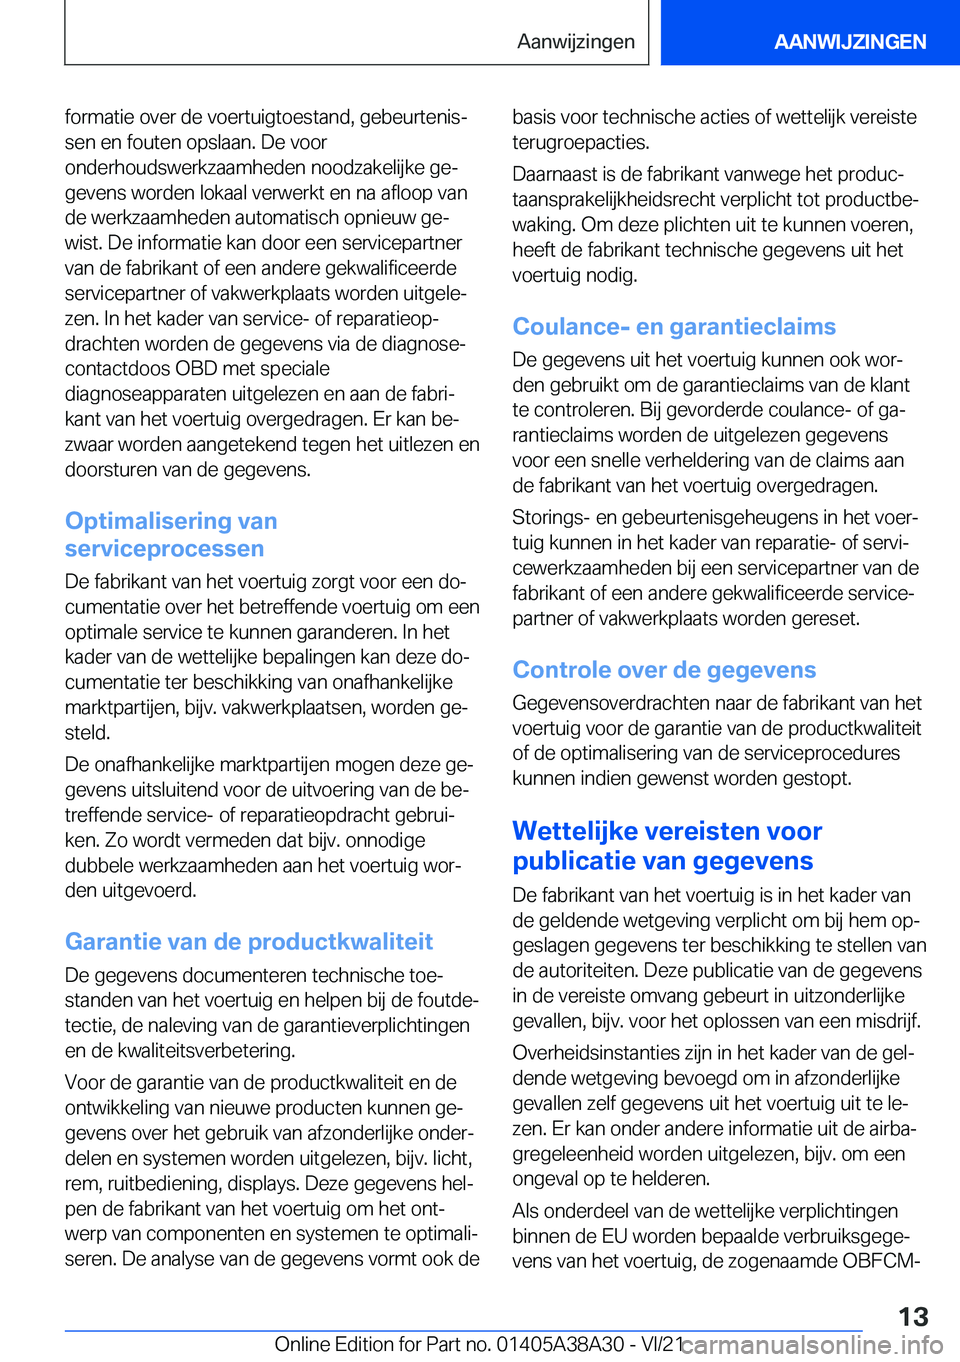 BMW 4 SERIES GRAN COUPE 2022  Instructieboekjes (in Dutch) �f�o�r�m�a�t�i�e��o�v�e�r��d�e��v�o�e�r�t�u�i�g�t�o�e�s�t�a�n�d�,��g�e�b�e�u�r�t�e�n�i�sj�s�e�n��e�n��f�o�u�t�e�n��o�p�s�l�a�a�n�.��D�e��v�o�o�r
�o�n�d�e�r�h�o�u�d�s�w�e�r�k�z�a�a�m�h�e�d�e�